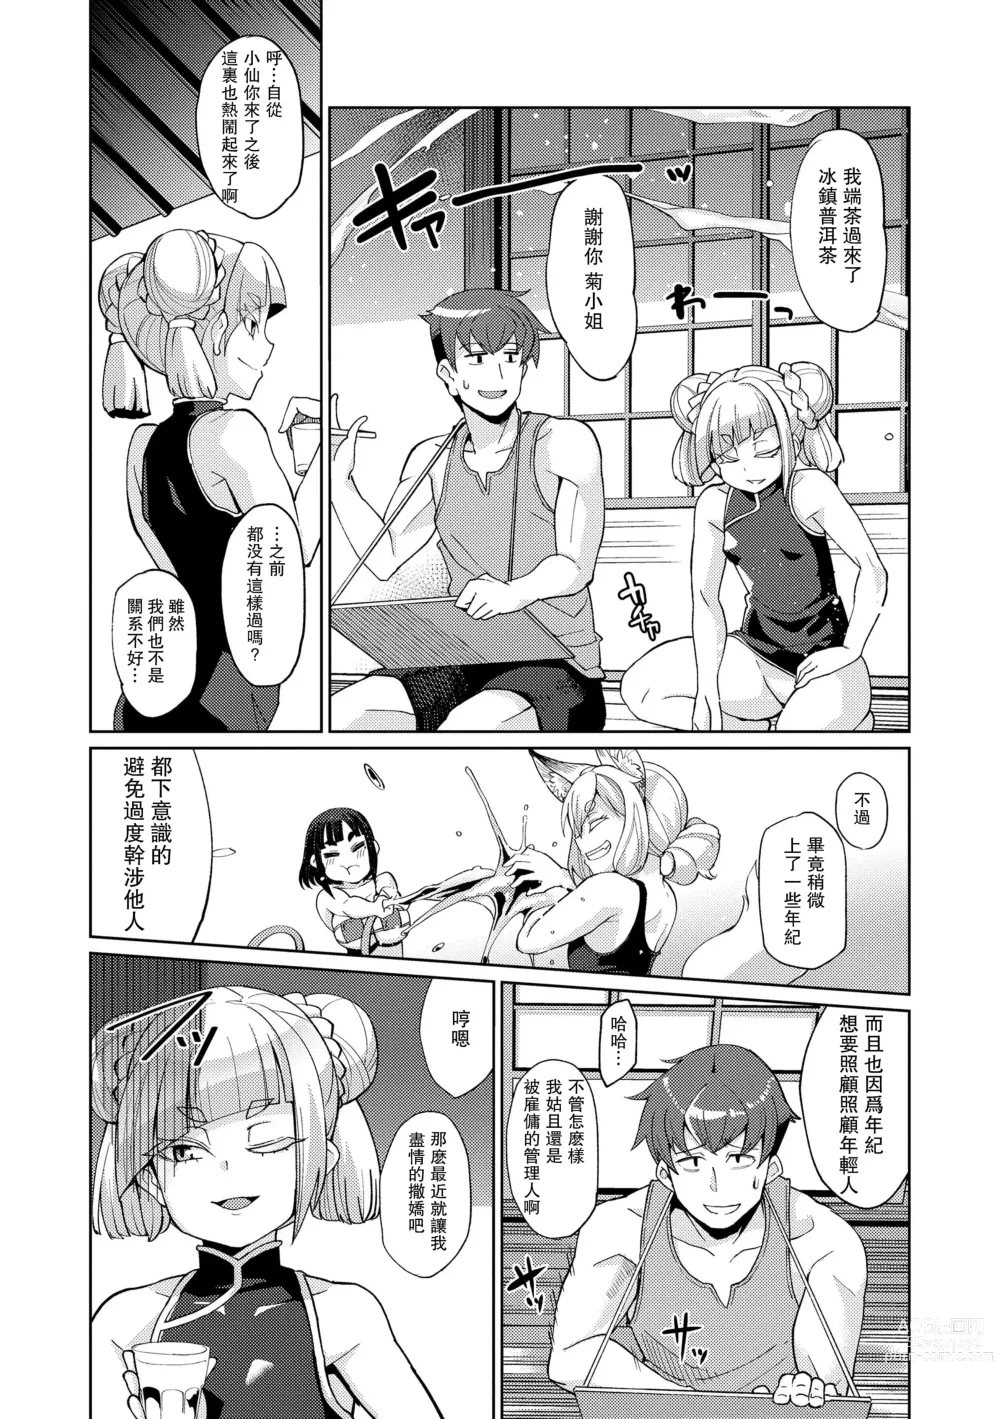 Page 6 of manga Kuon-sou no Youba-tachi Ch. 3